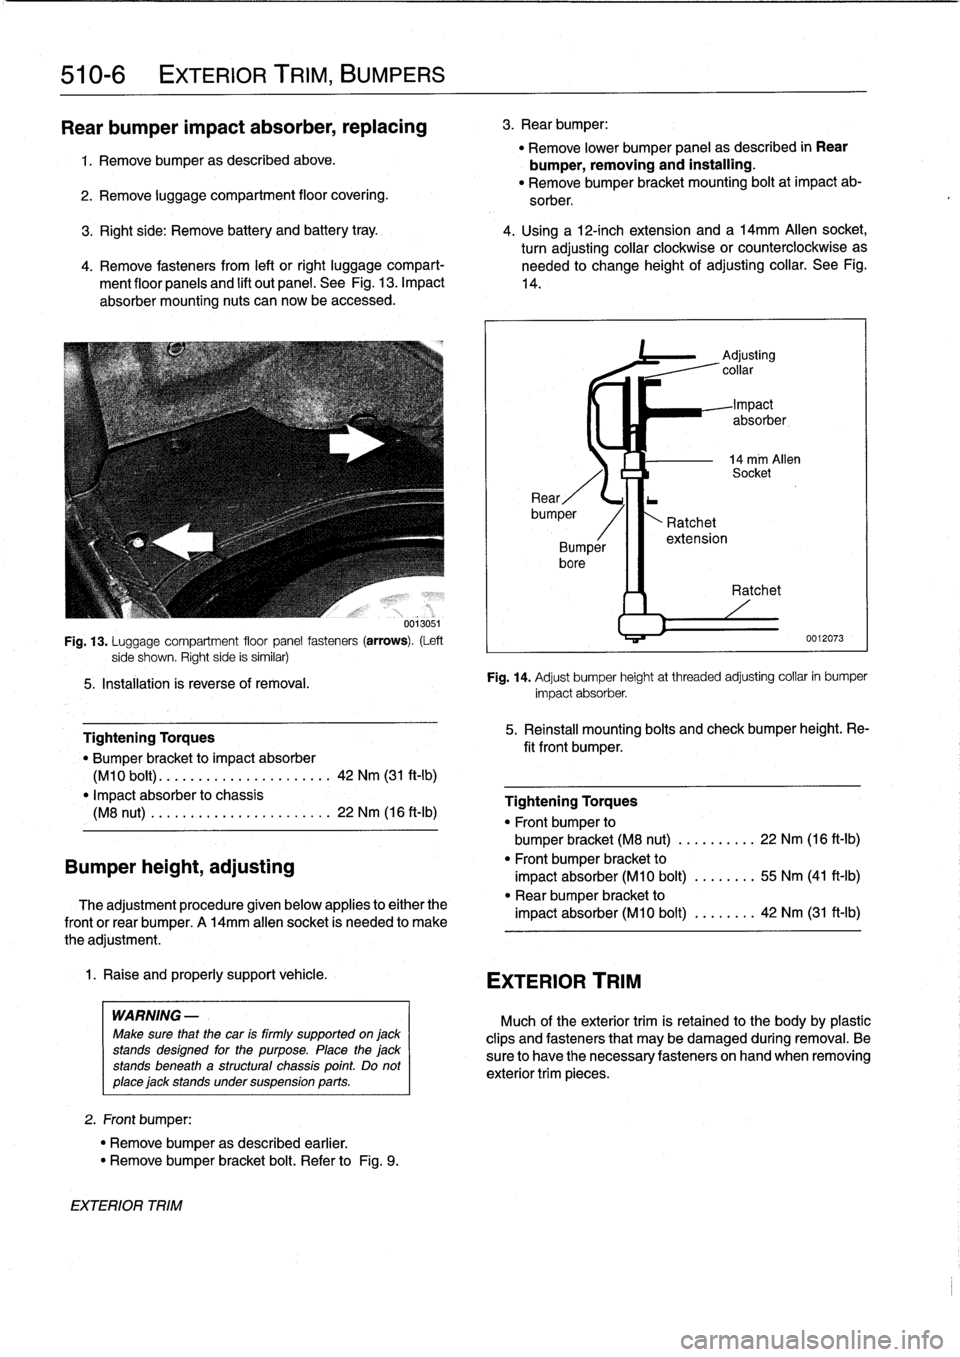 BMW 323i 1993 E36 Workshop Manual 
510-
6

	

EXTERIOR
TRIM,
BUMPERS

Rear
bumper
impact
absorber,replacing

1
.
Remove
bumperas
described
above
.

2
.
Remove
luggage
compartment
floor
covering
.

Fig
.
13
.
Luggage
compartment
floor
